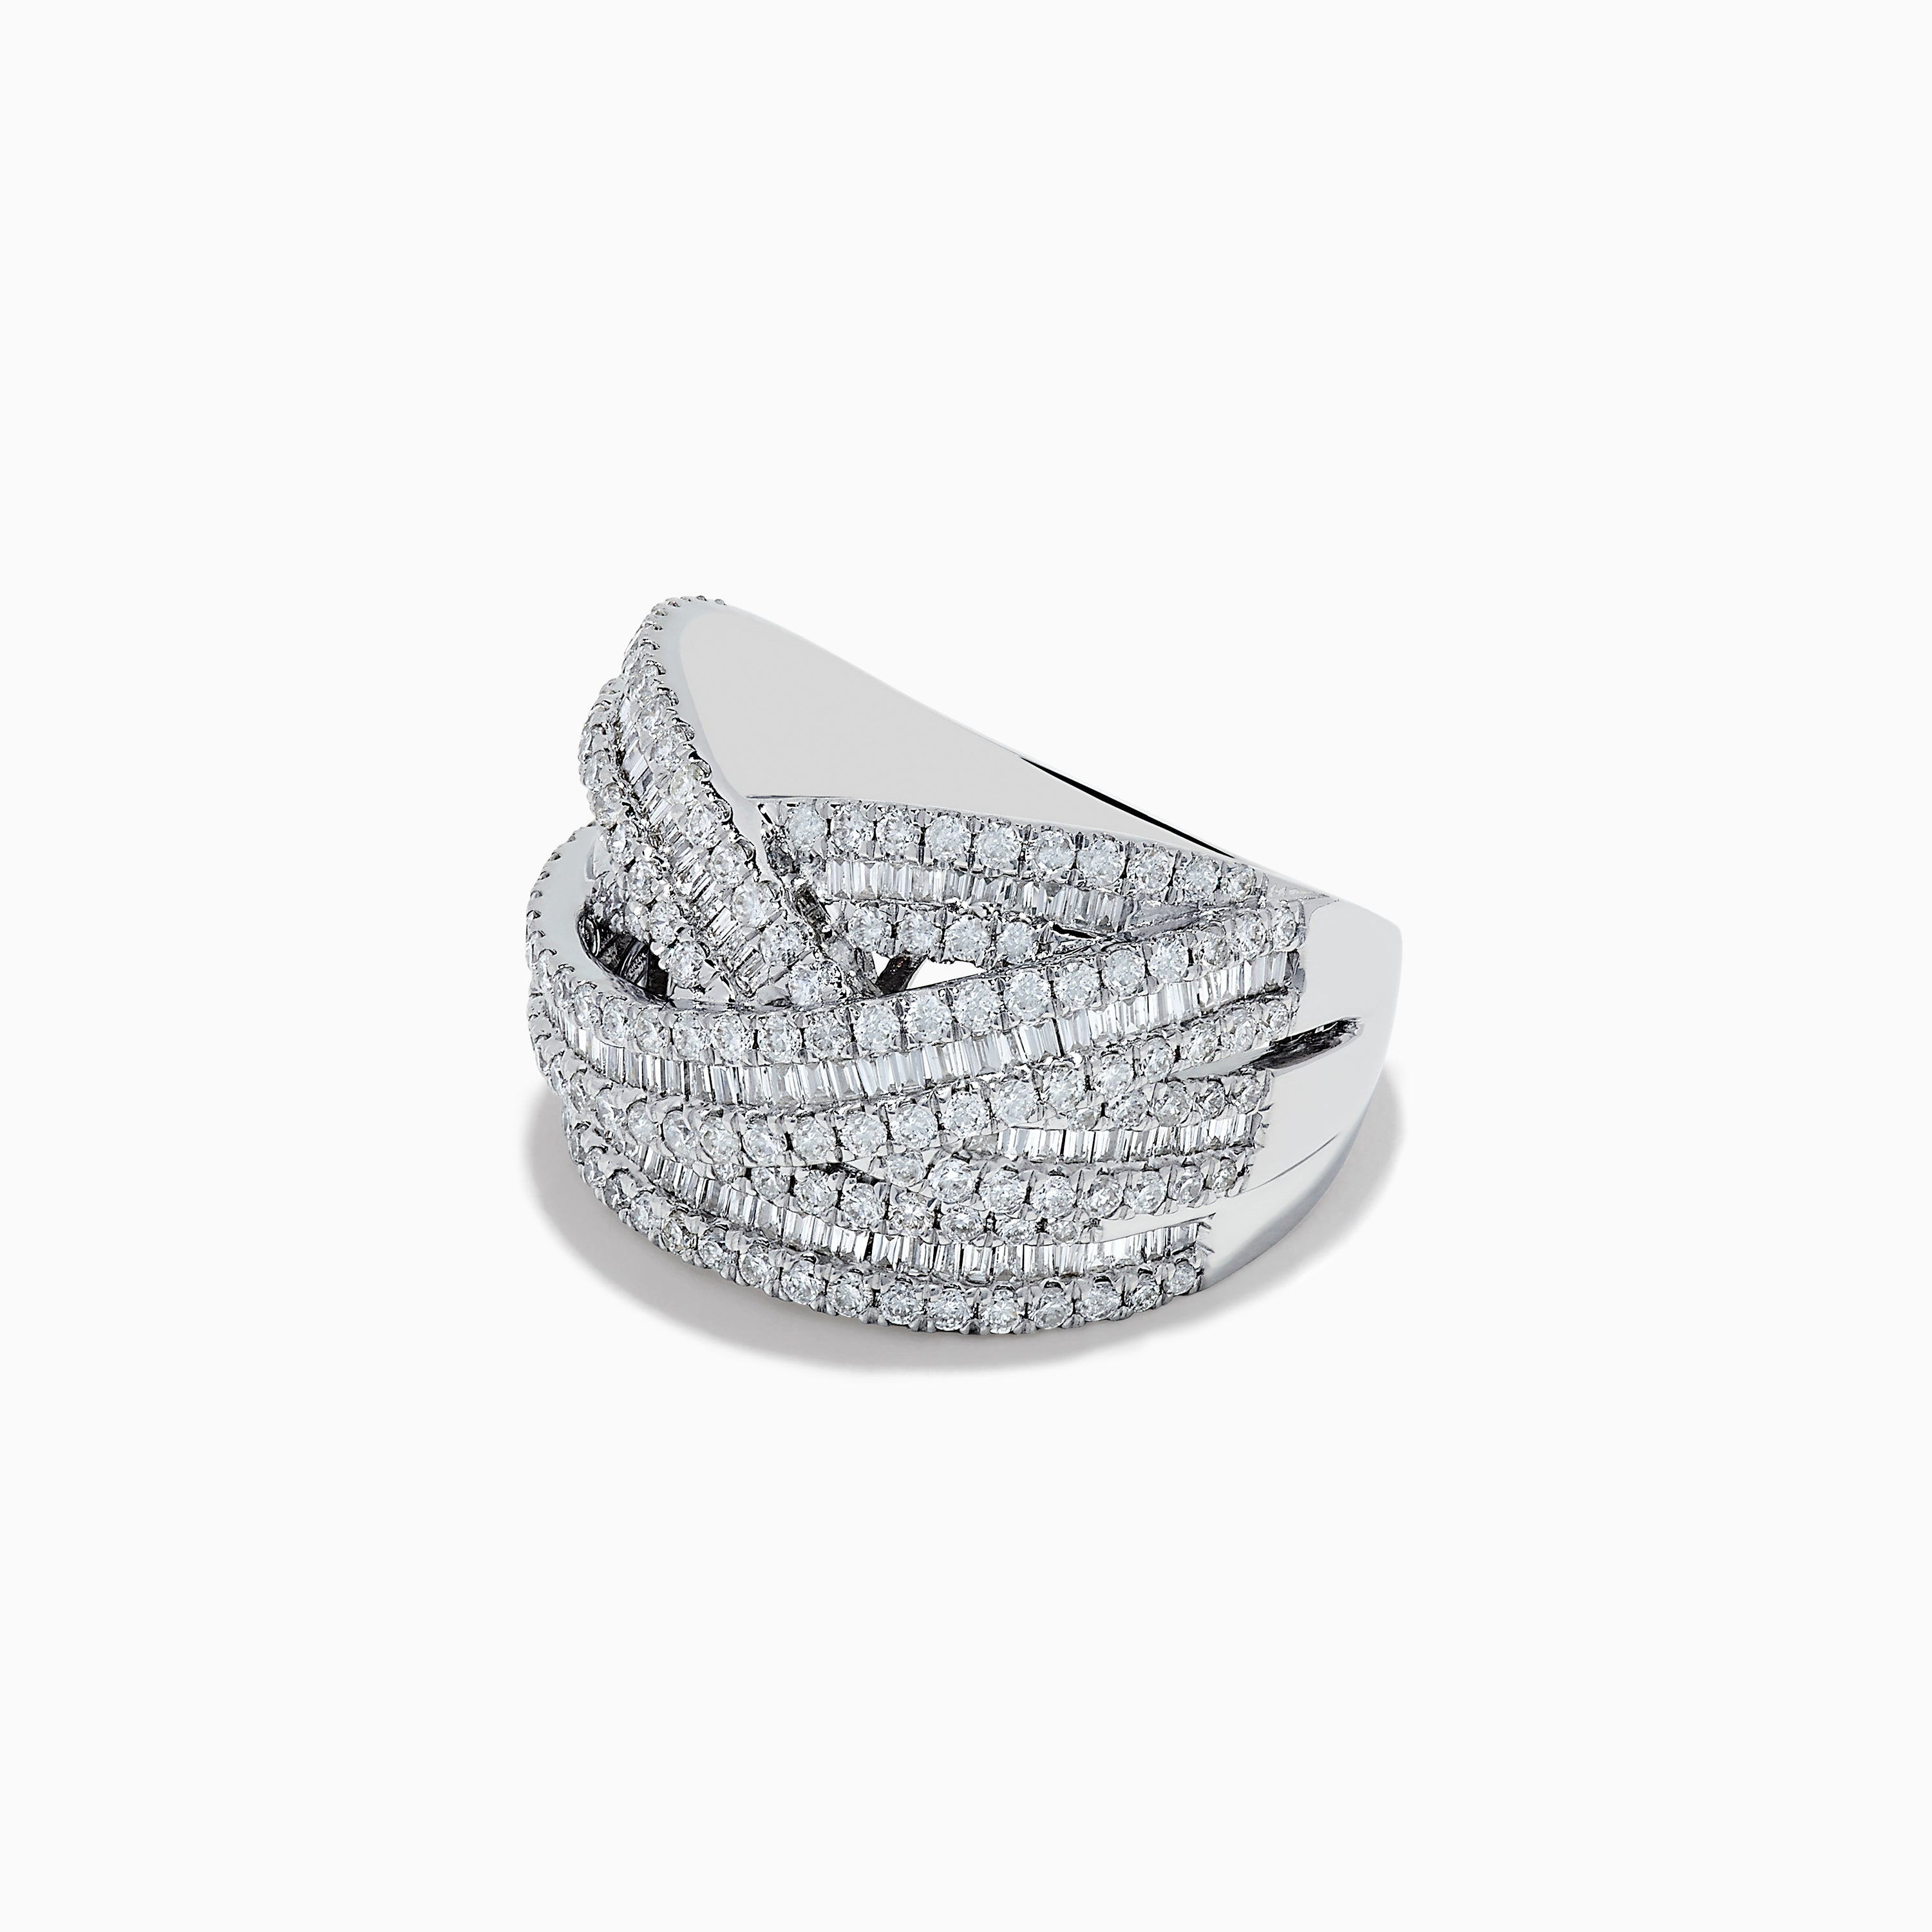 Effy Classique 14K White Gold Diamond Necklace